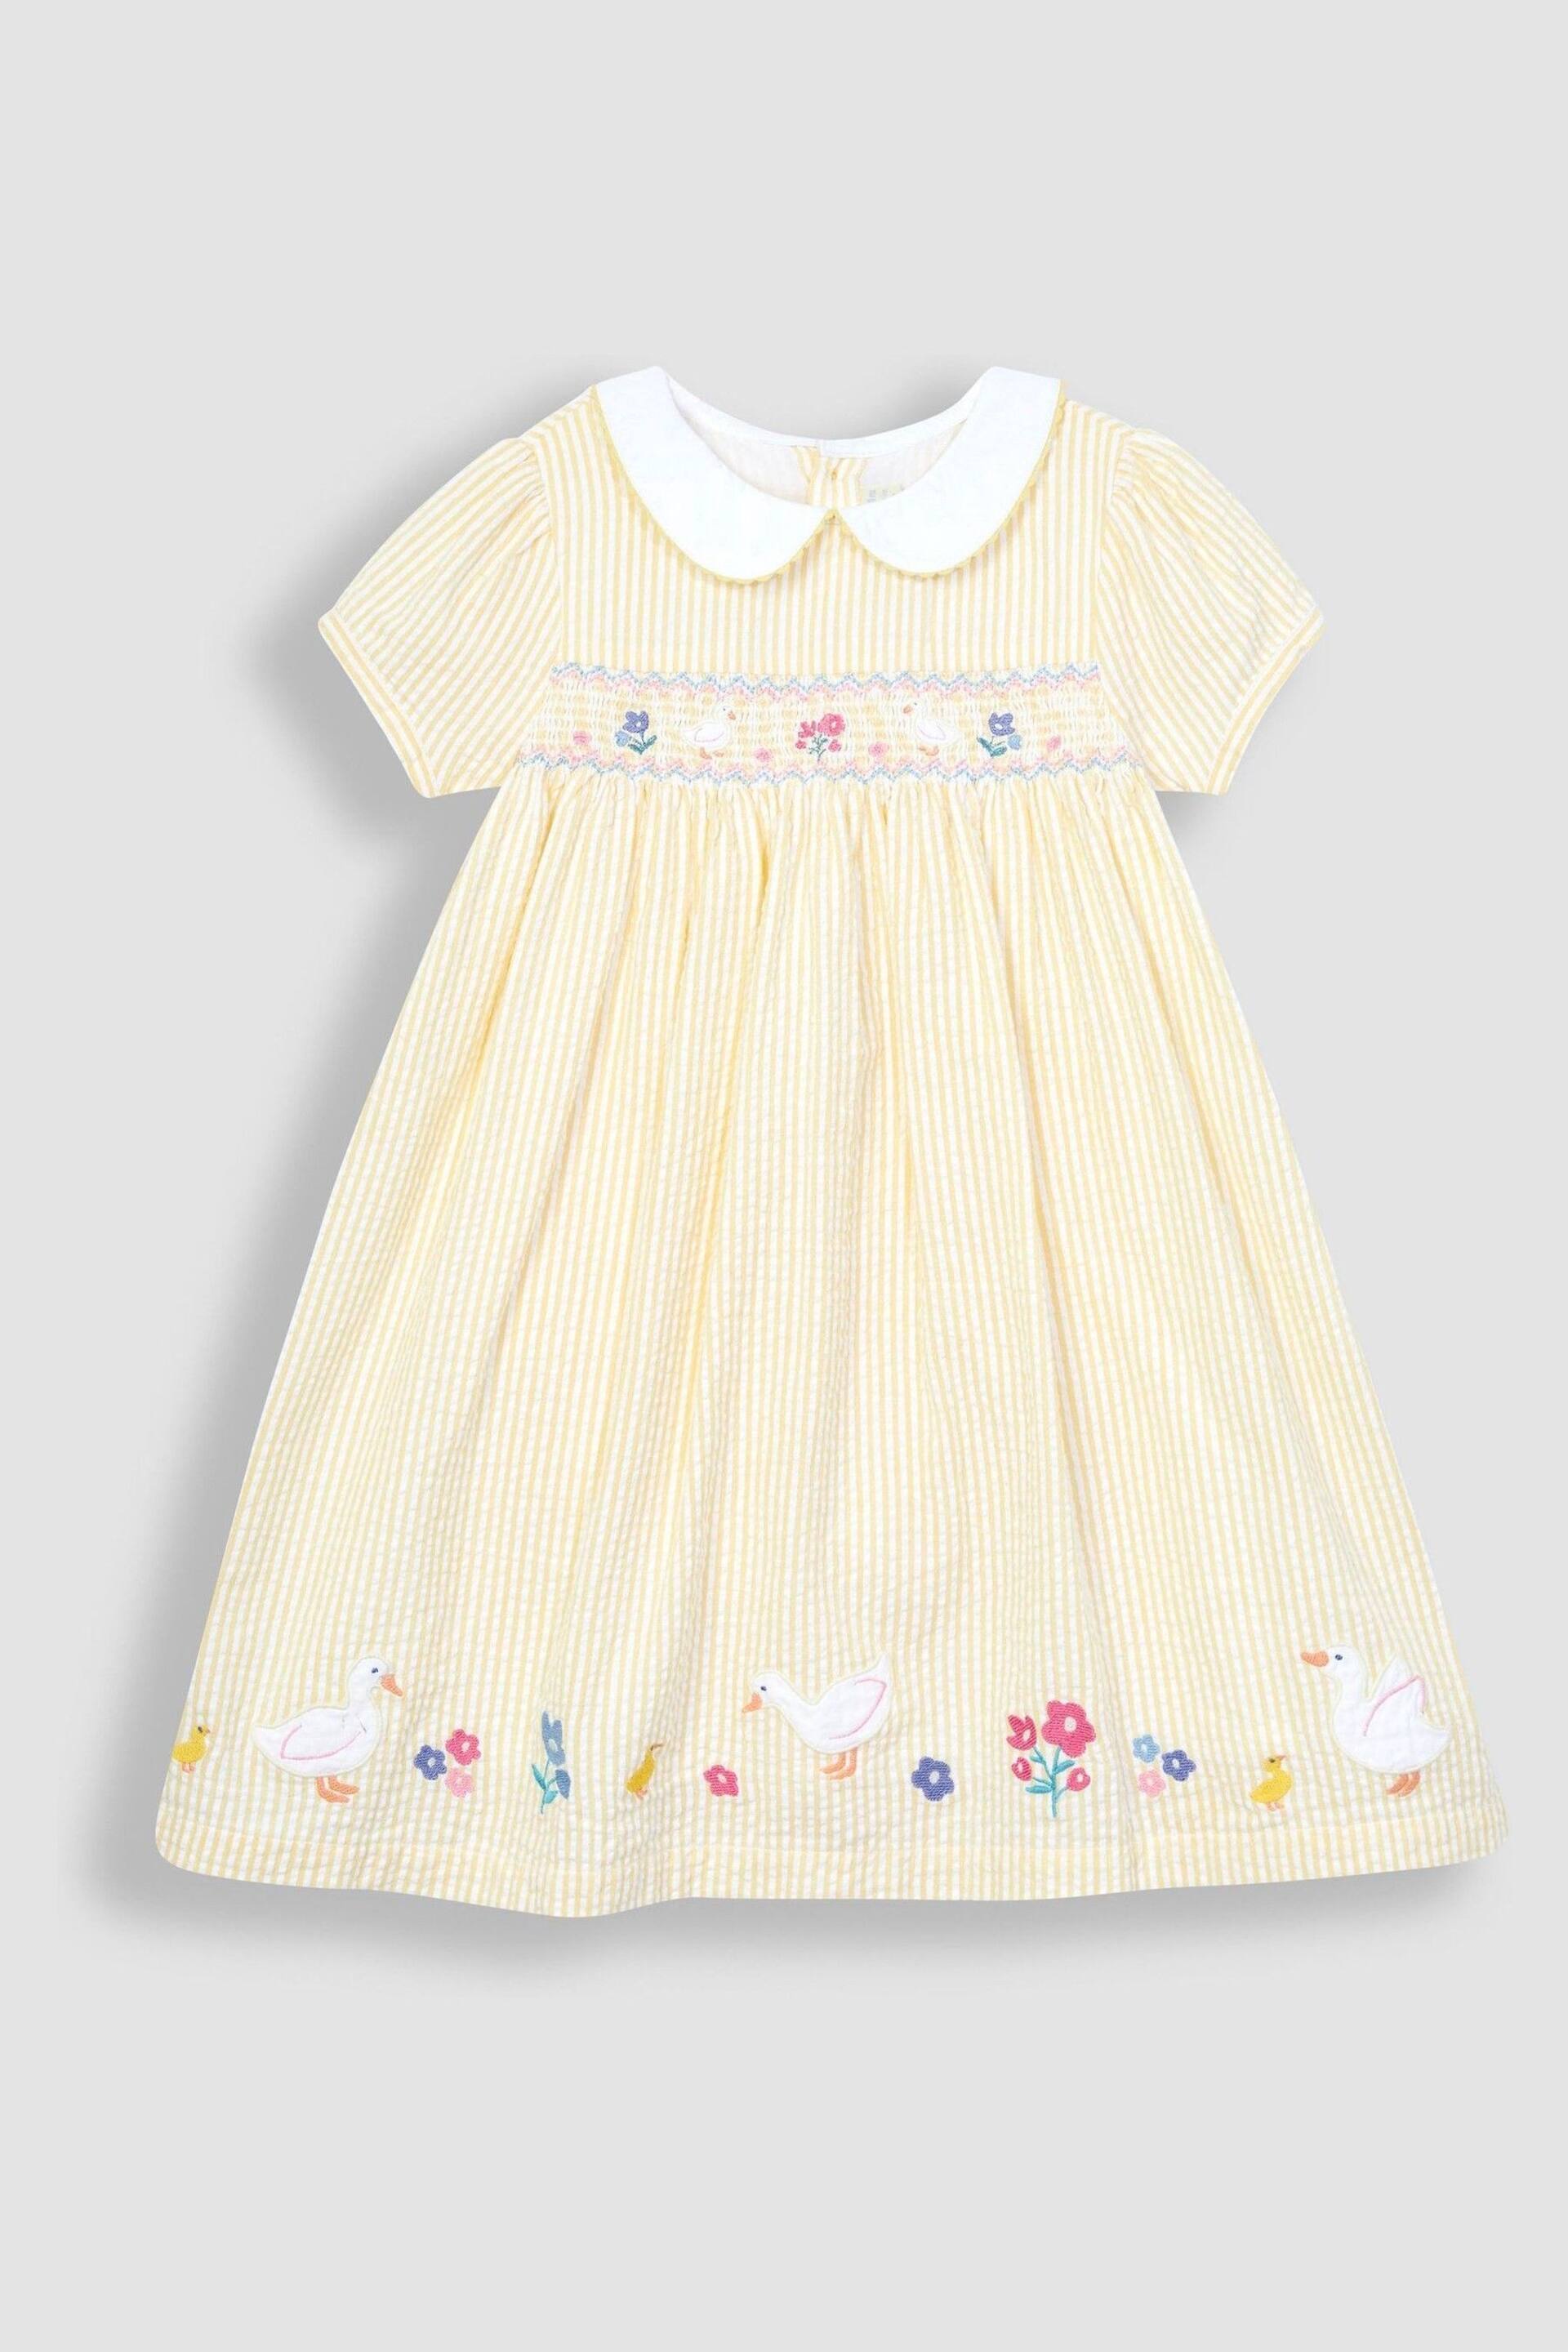 JoJo Maman Bébé Yellow Duck Embroidered Smocked Dress - Image 4 of 7